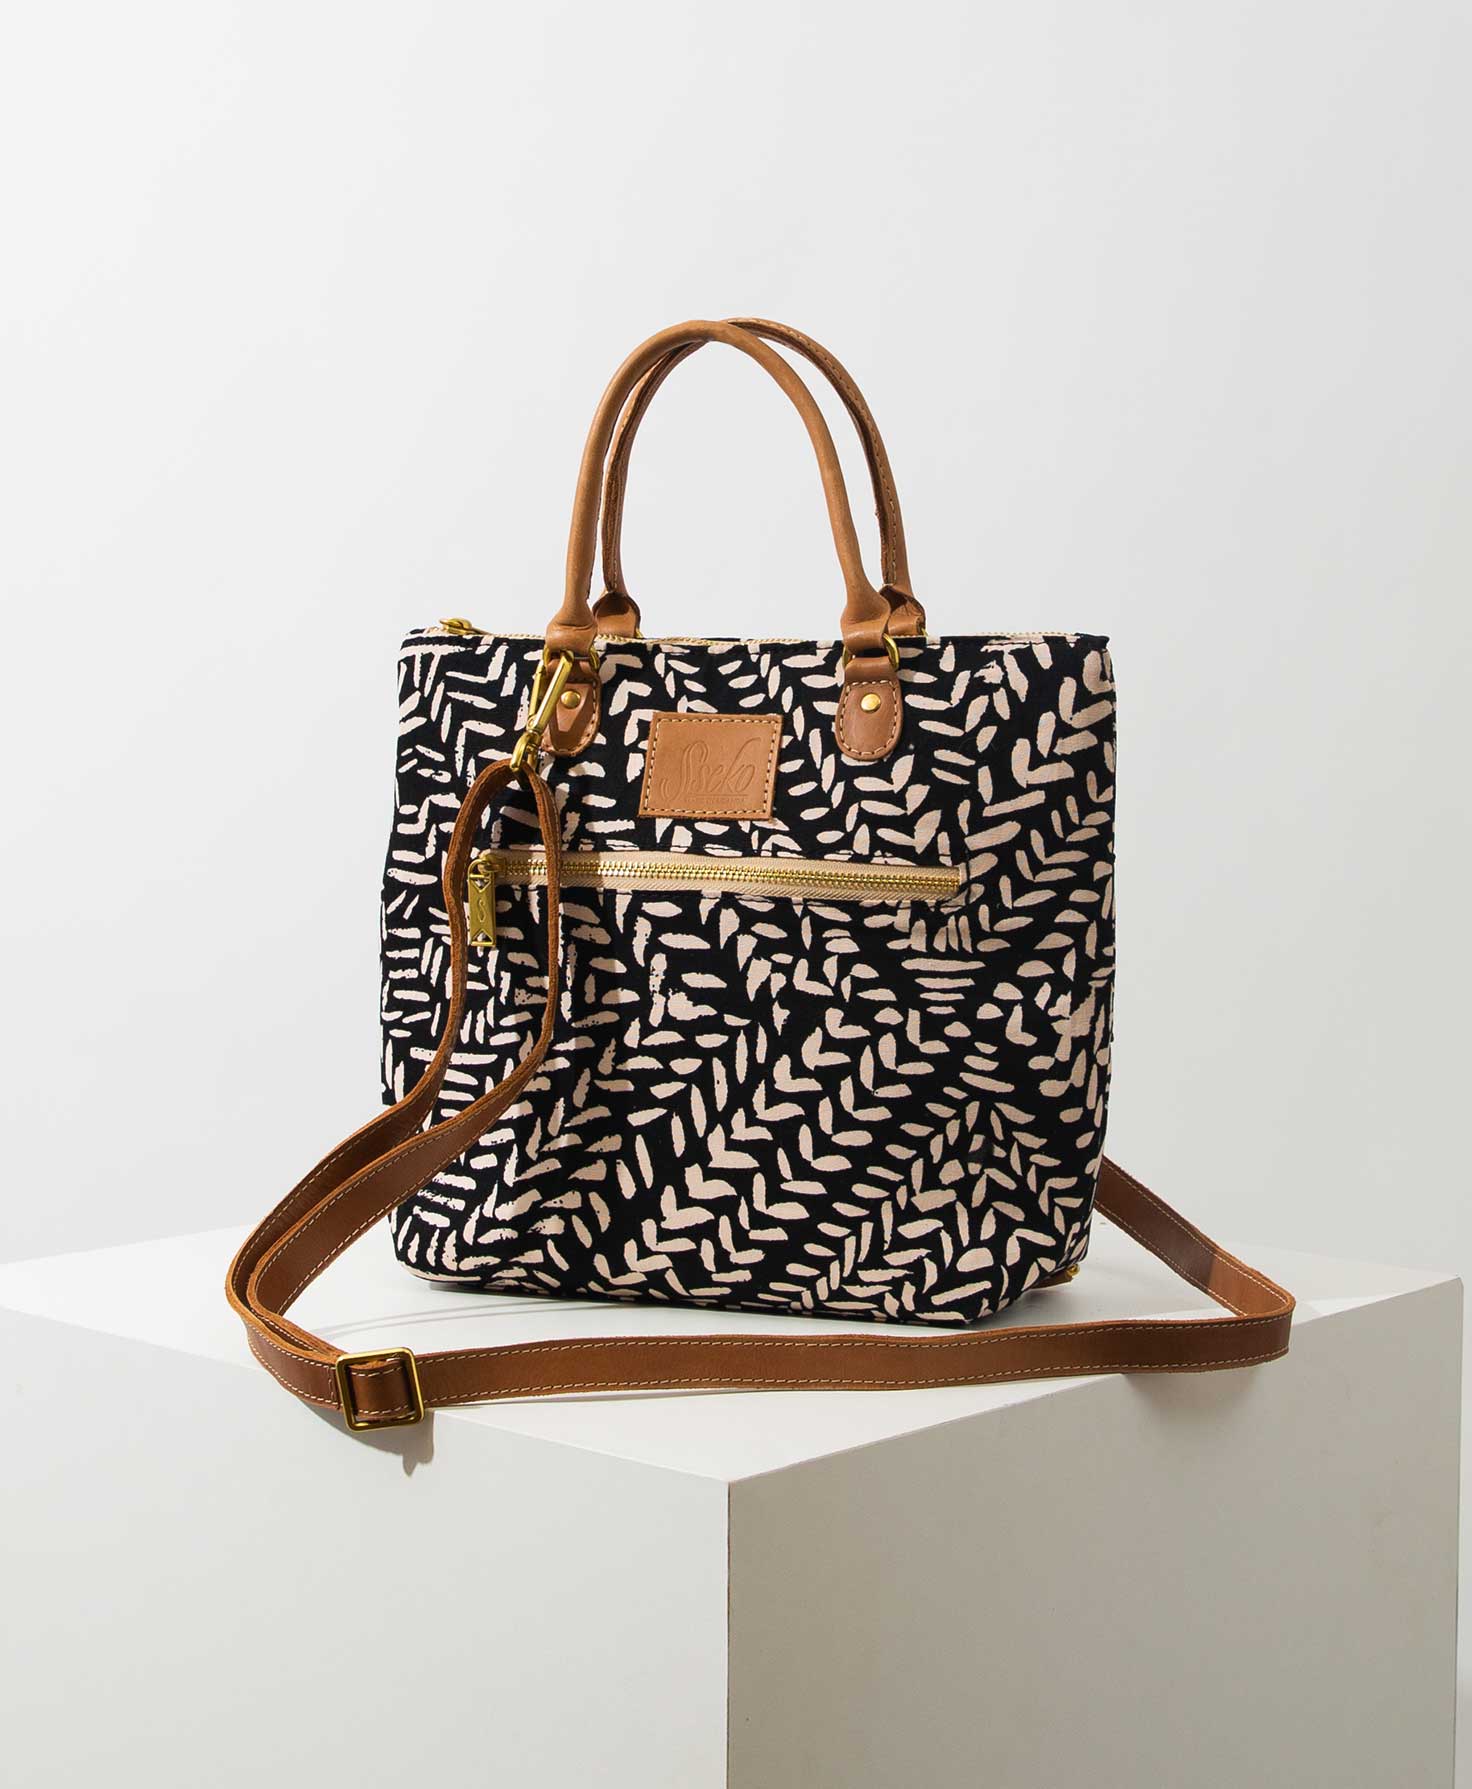 Louis Vuitton Pre-owned Women's Synthetic Fibers Cross Body Bag - Beige - One Size